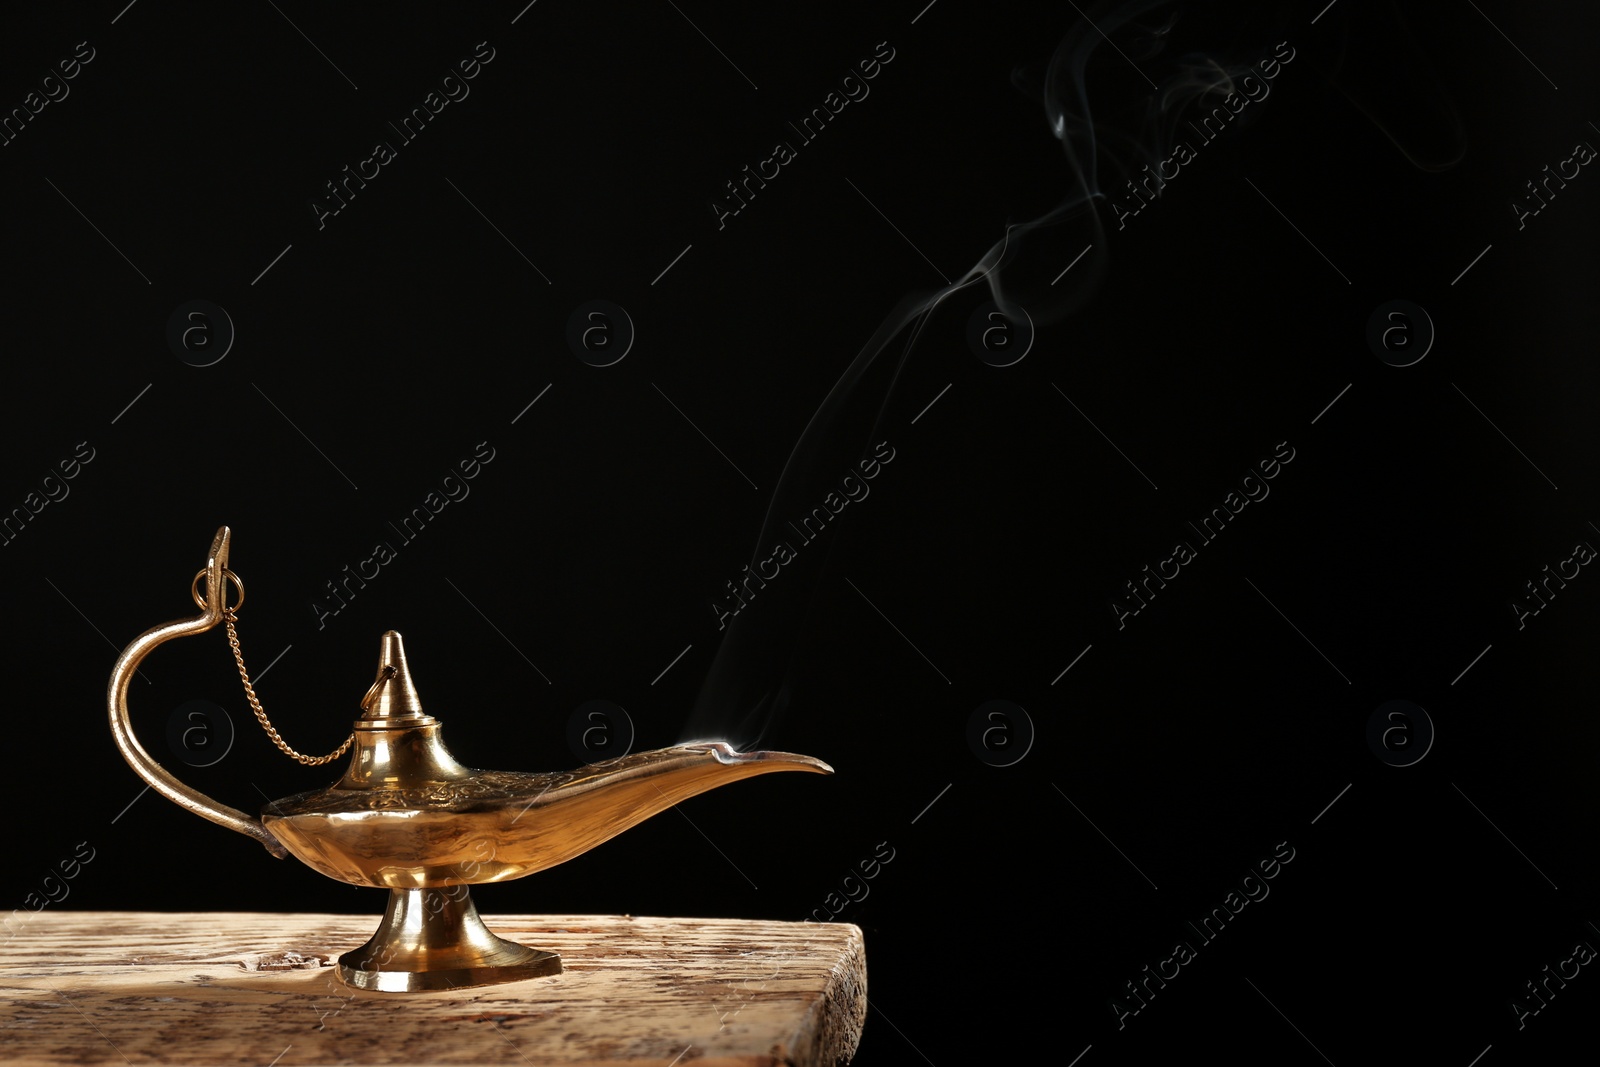 Photo of Aladdin magic lamp on table against black background